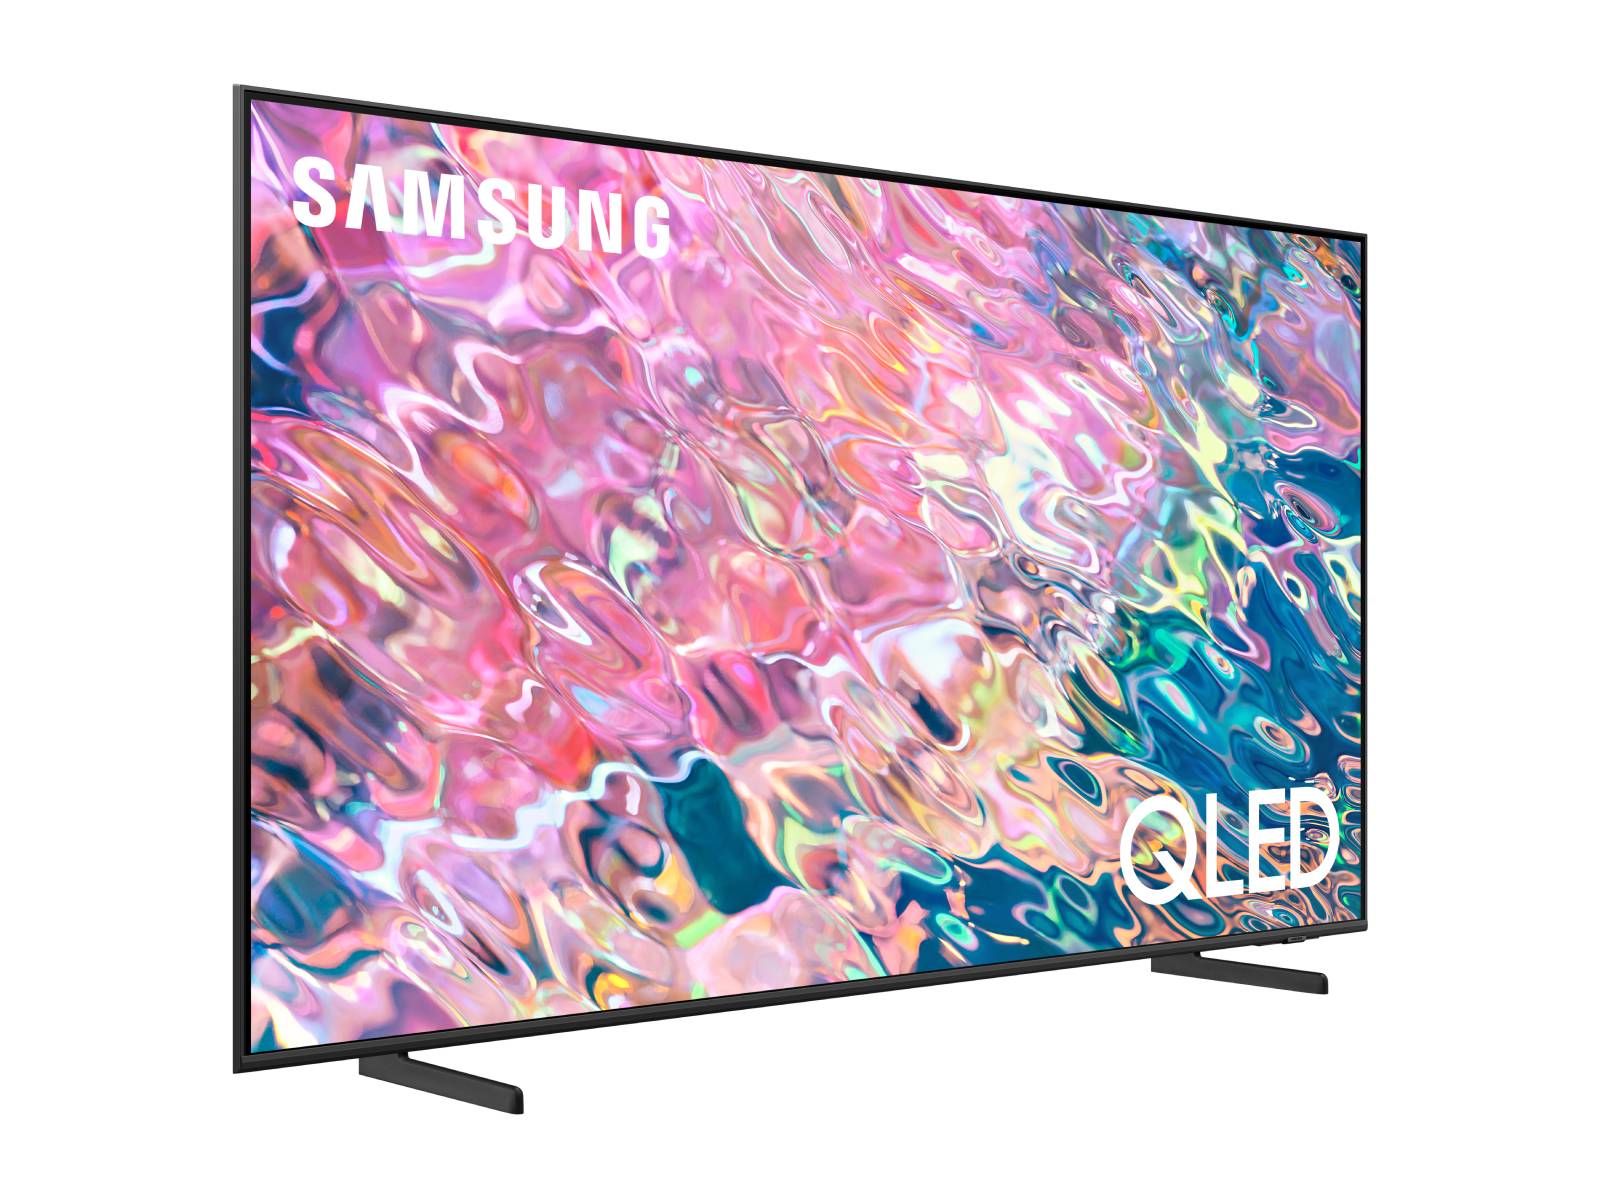 VENDO] Television Samsung Smart TV 22